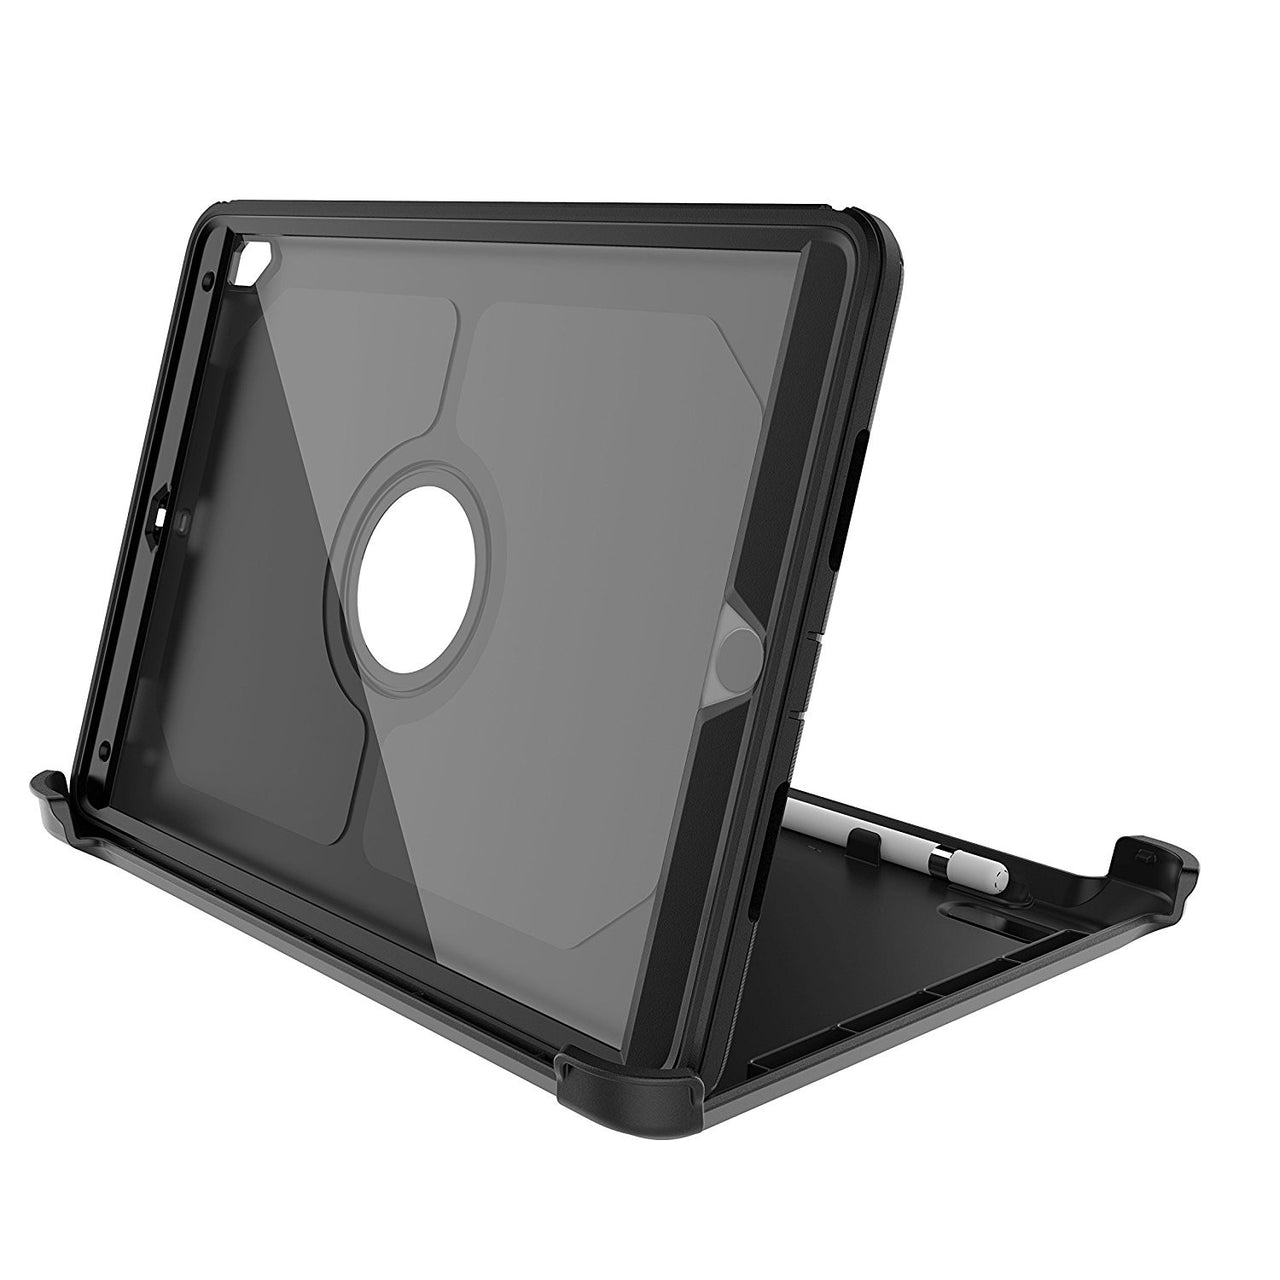 Otterbox Defender Case Suits Ipad Air 3rd Gen/ipad Pro 10.5 Inch - Black